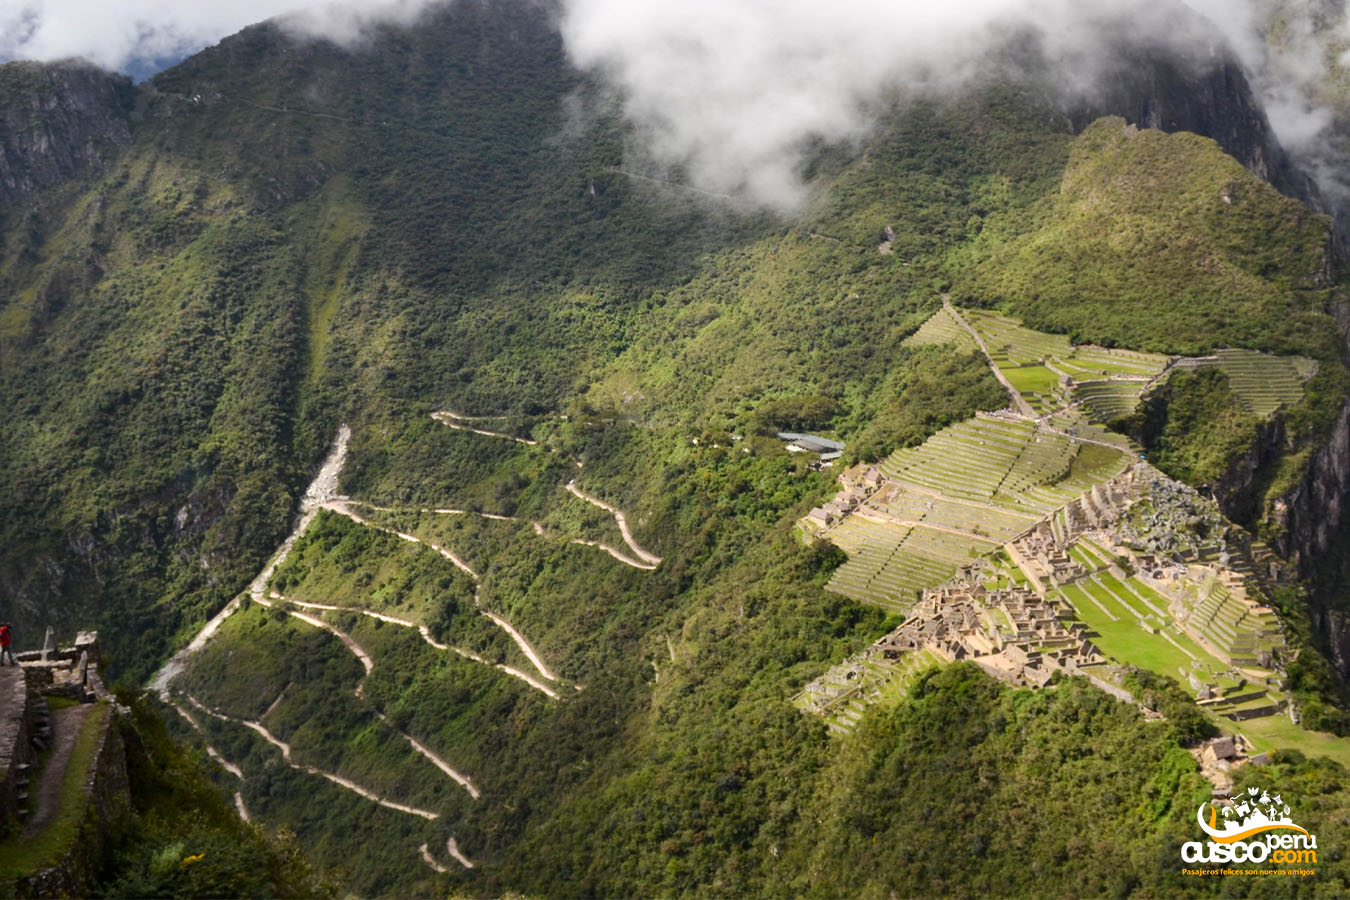 View of the Hiram Bingham road from Huayna Picchu mountain. Source: CuscoPeru.com